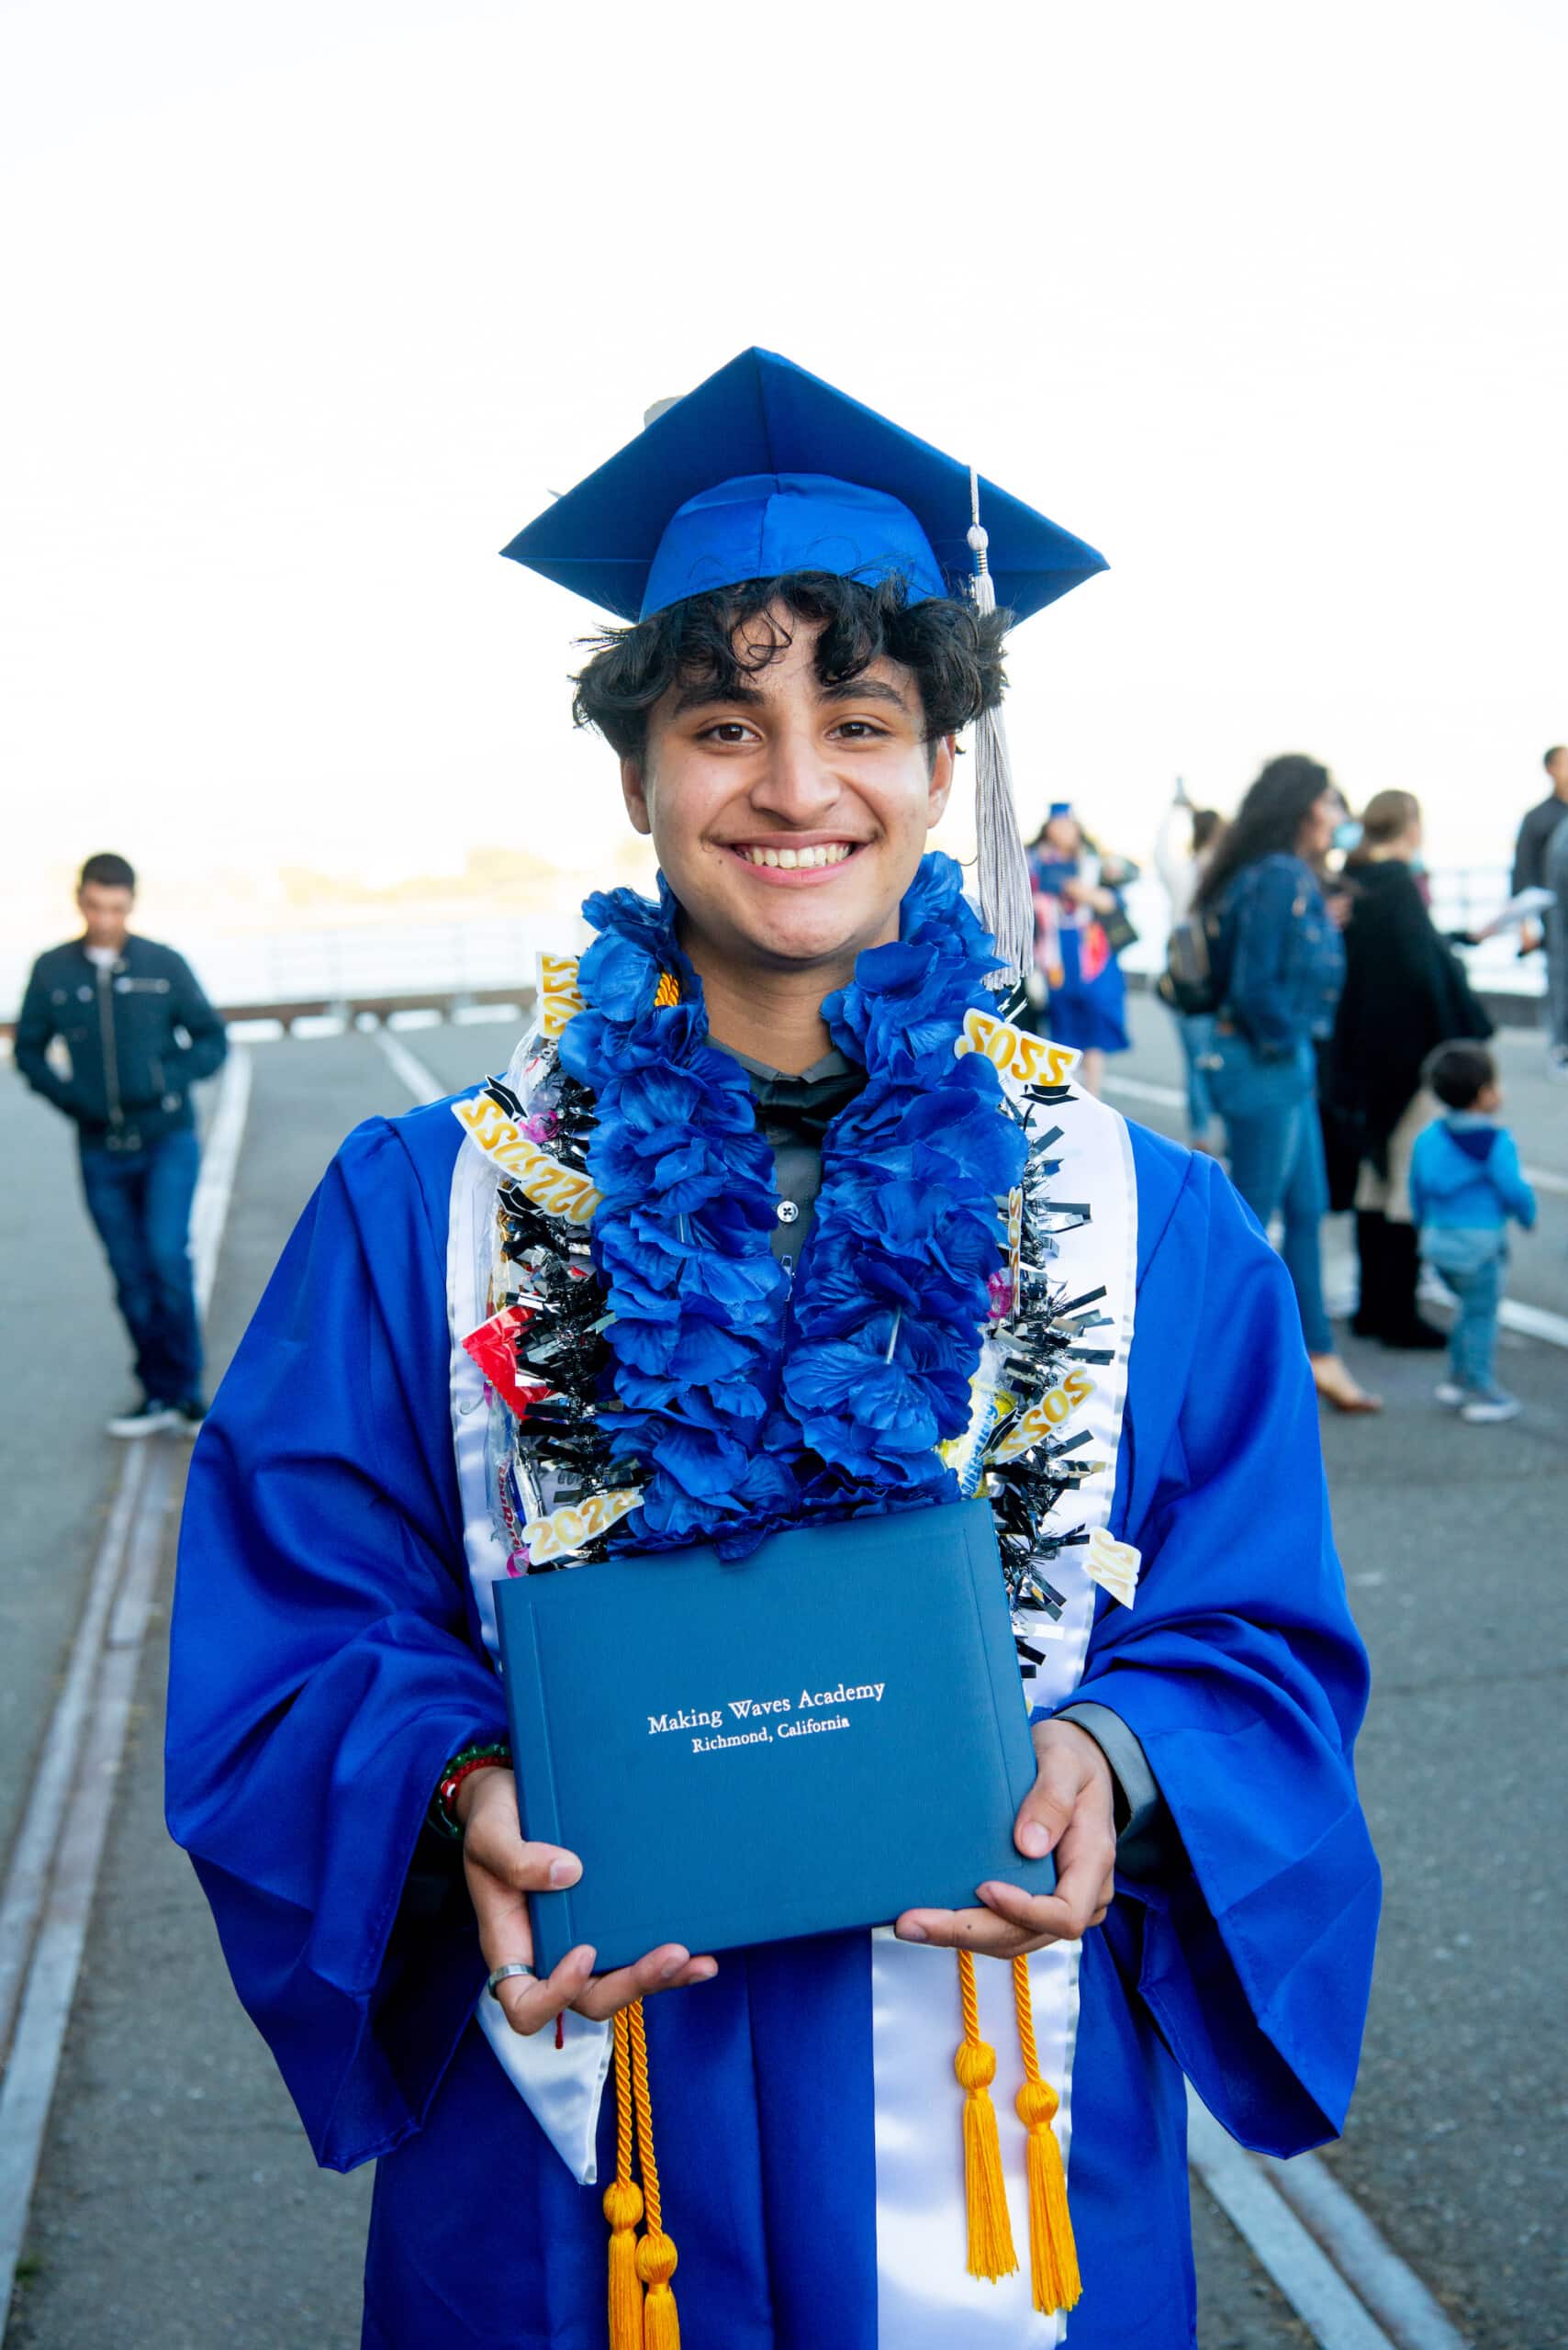 Student holding diploma at graduation